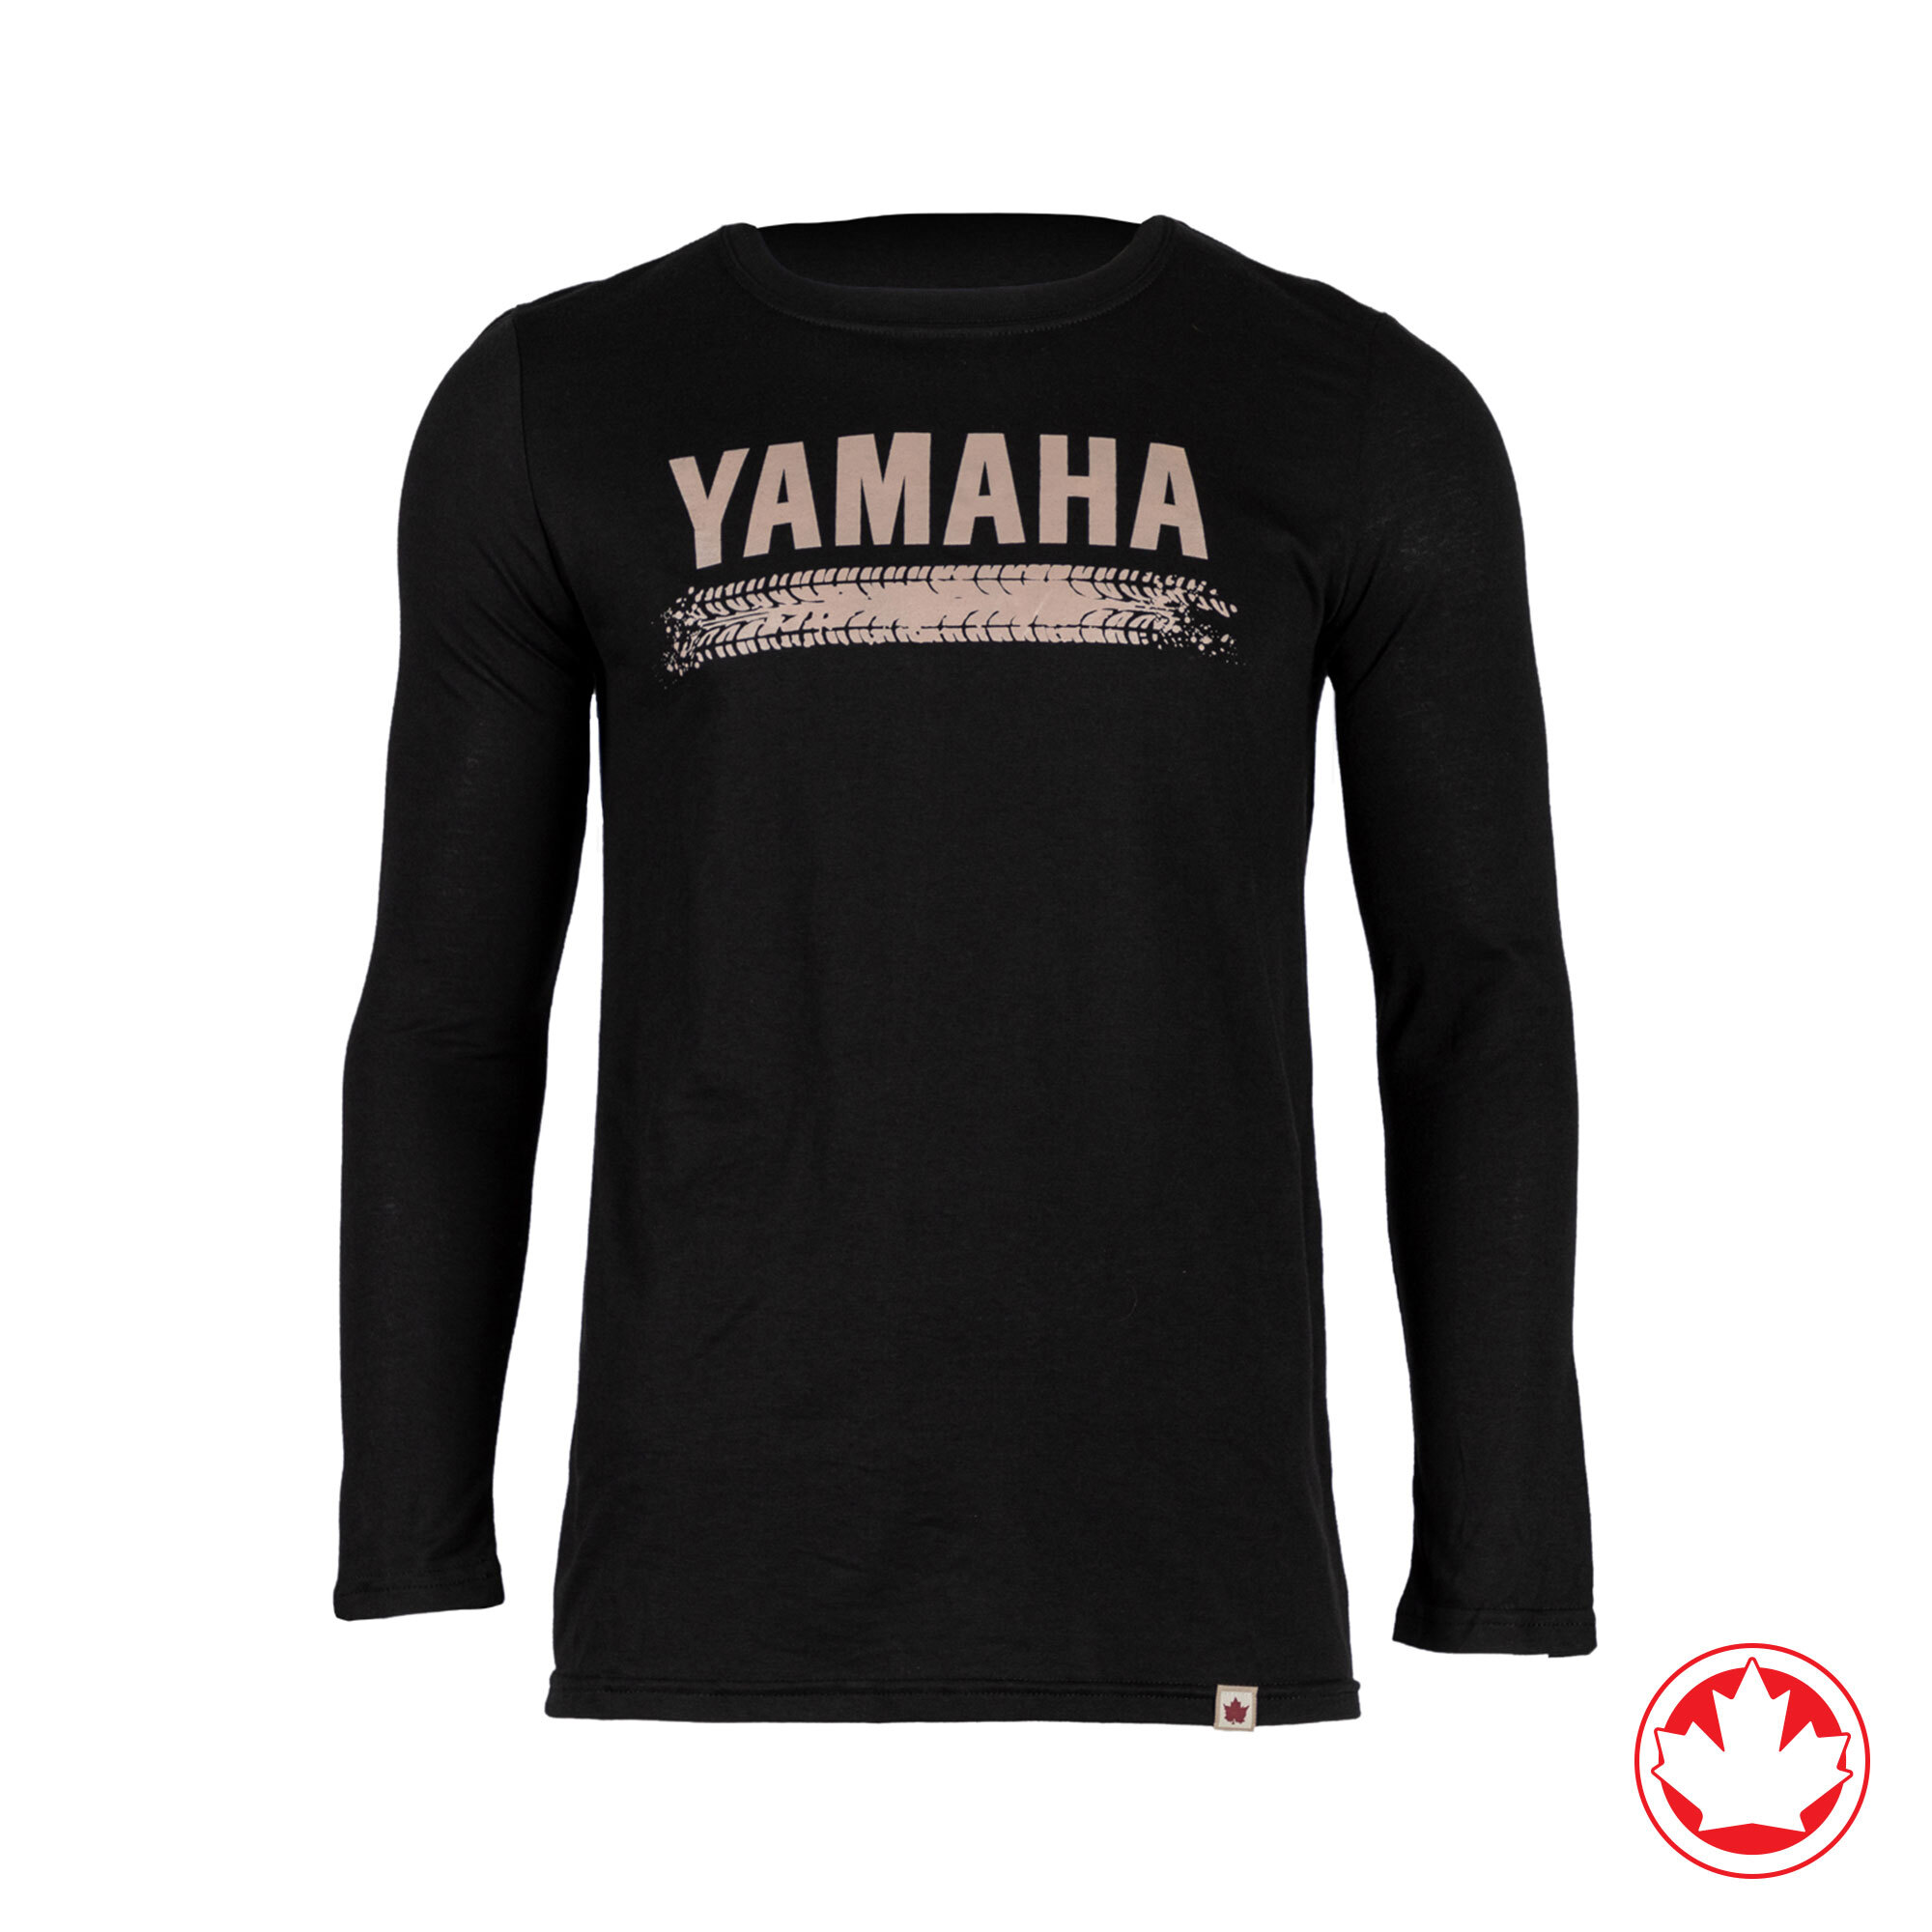 Yamaha Dirt Track Long Sleeve Tshirt